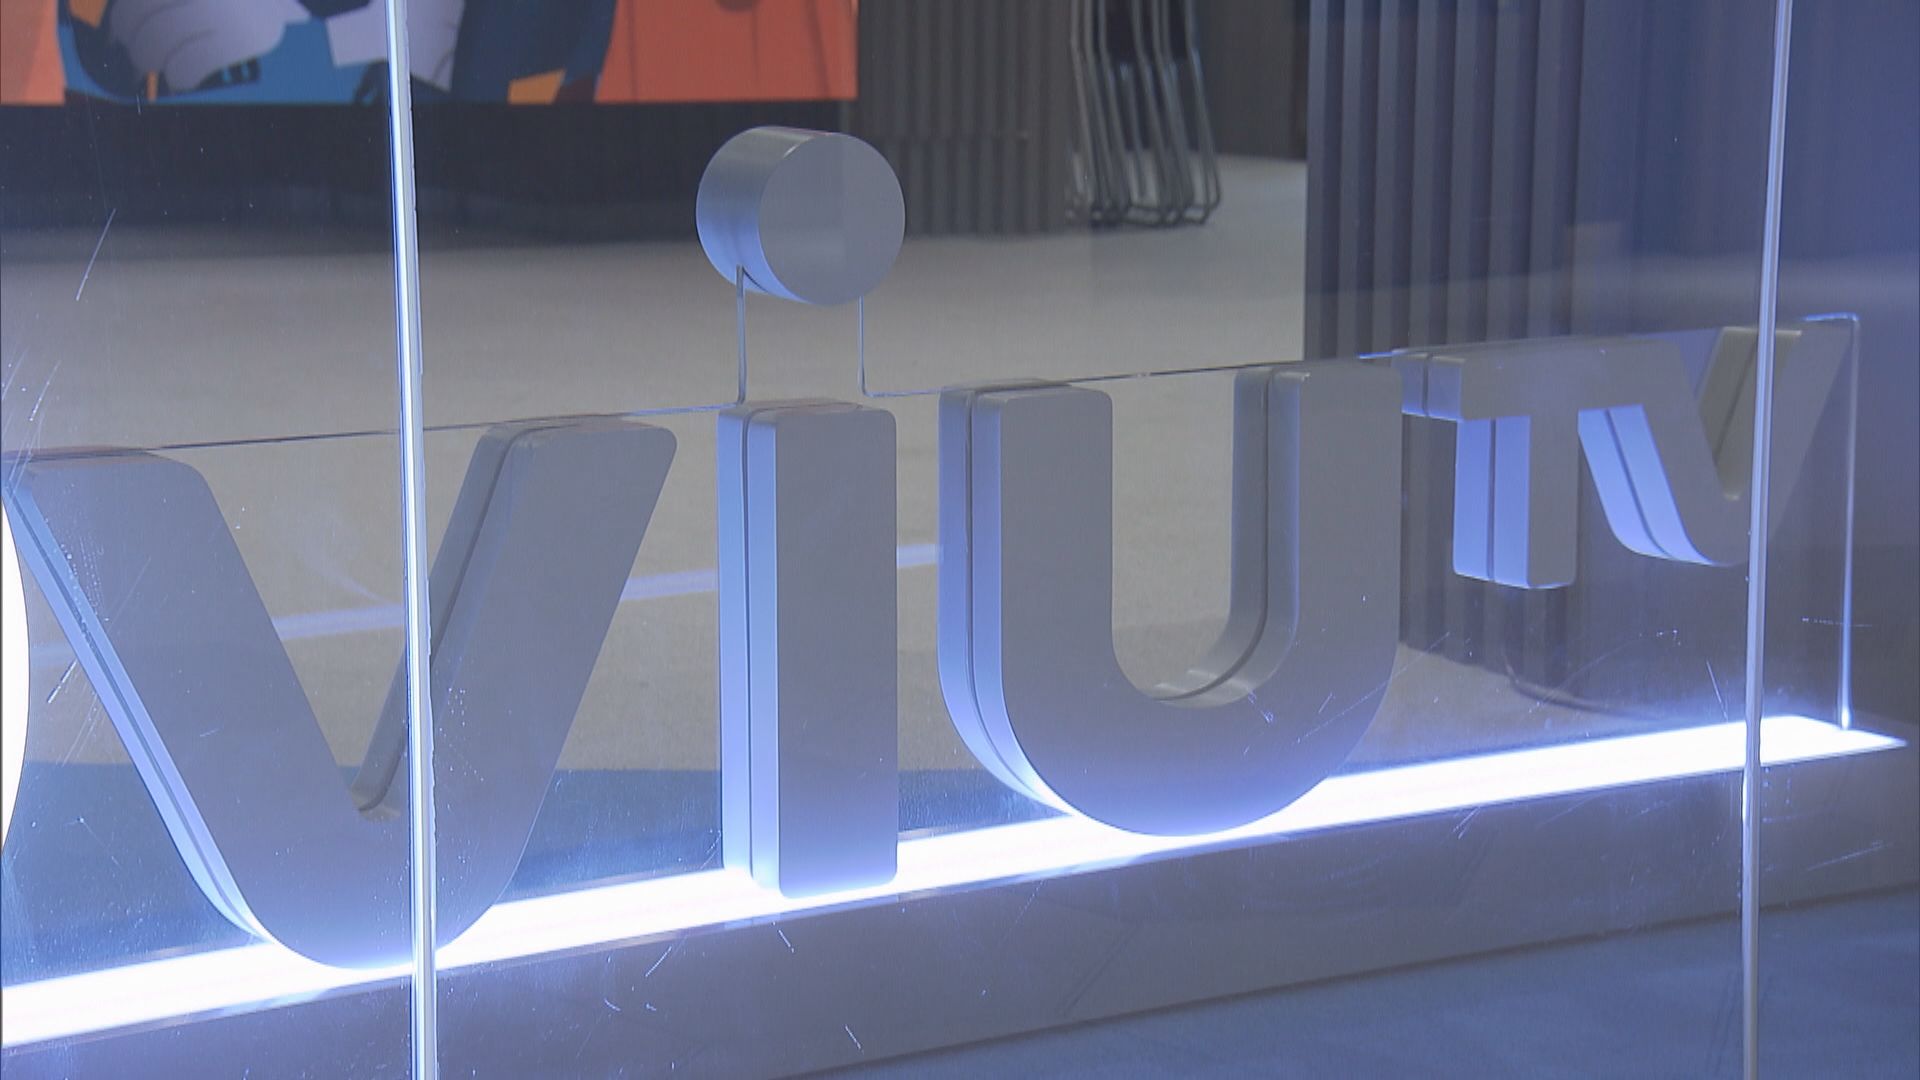 ViuTV感謝政府取得奧運播映權 為觀眾帶來最廣泛及多元化觀賞體驗